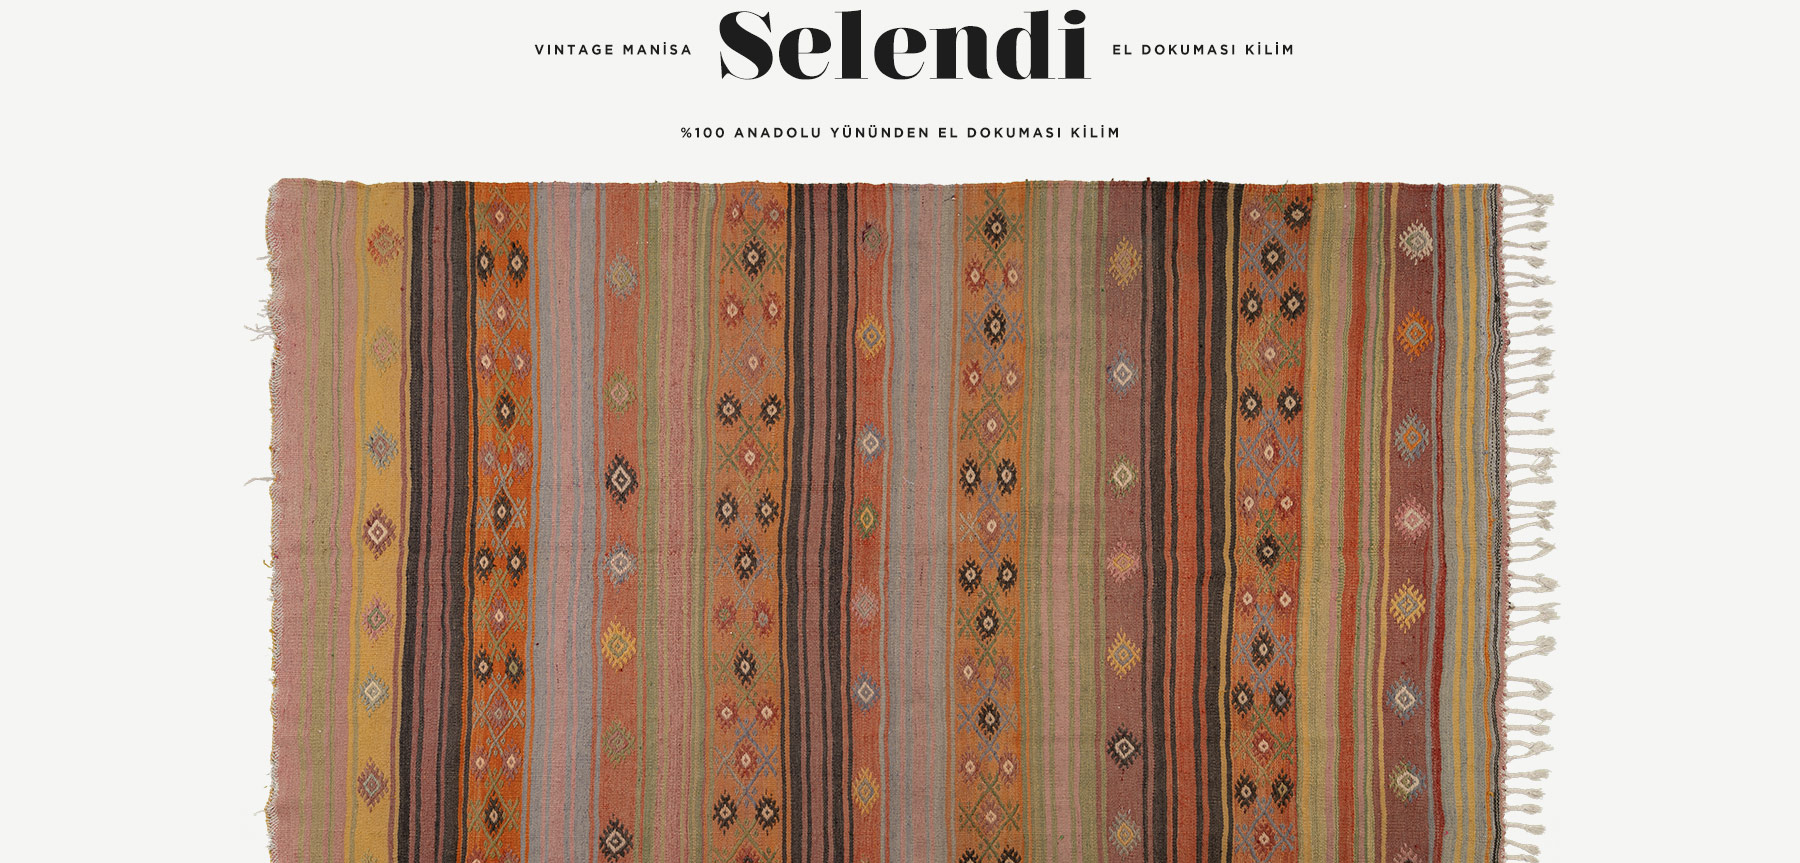 vintage manisa selendi cicim el dokuması kilim 5,03 m2'in resmi